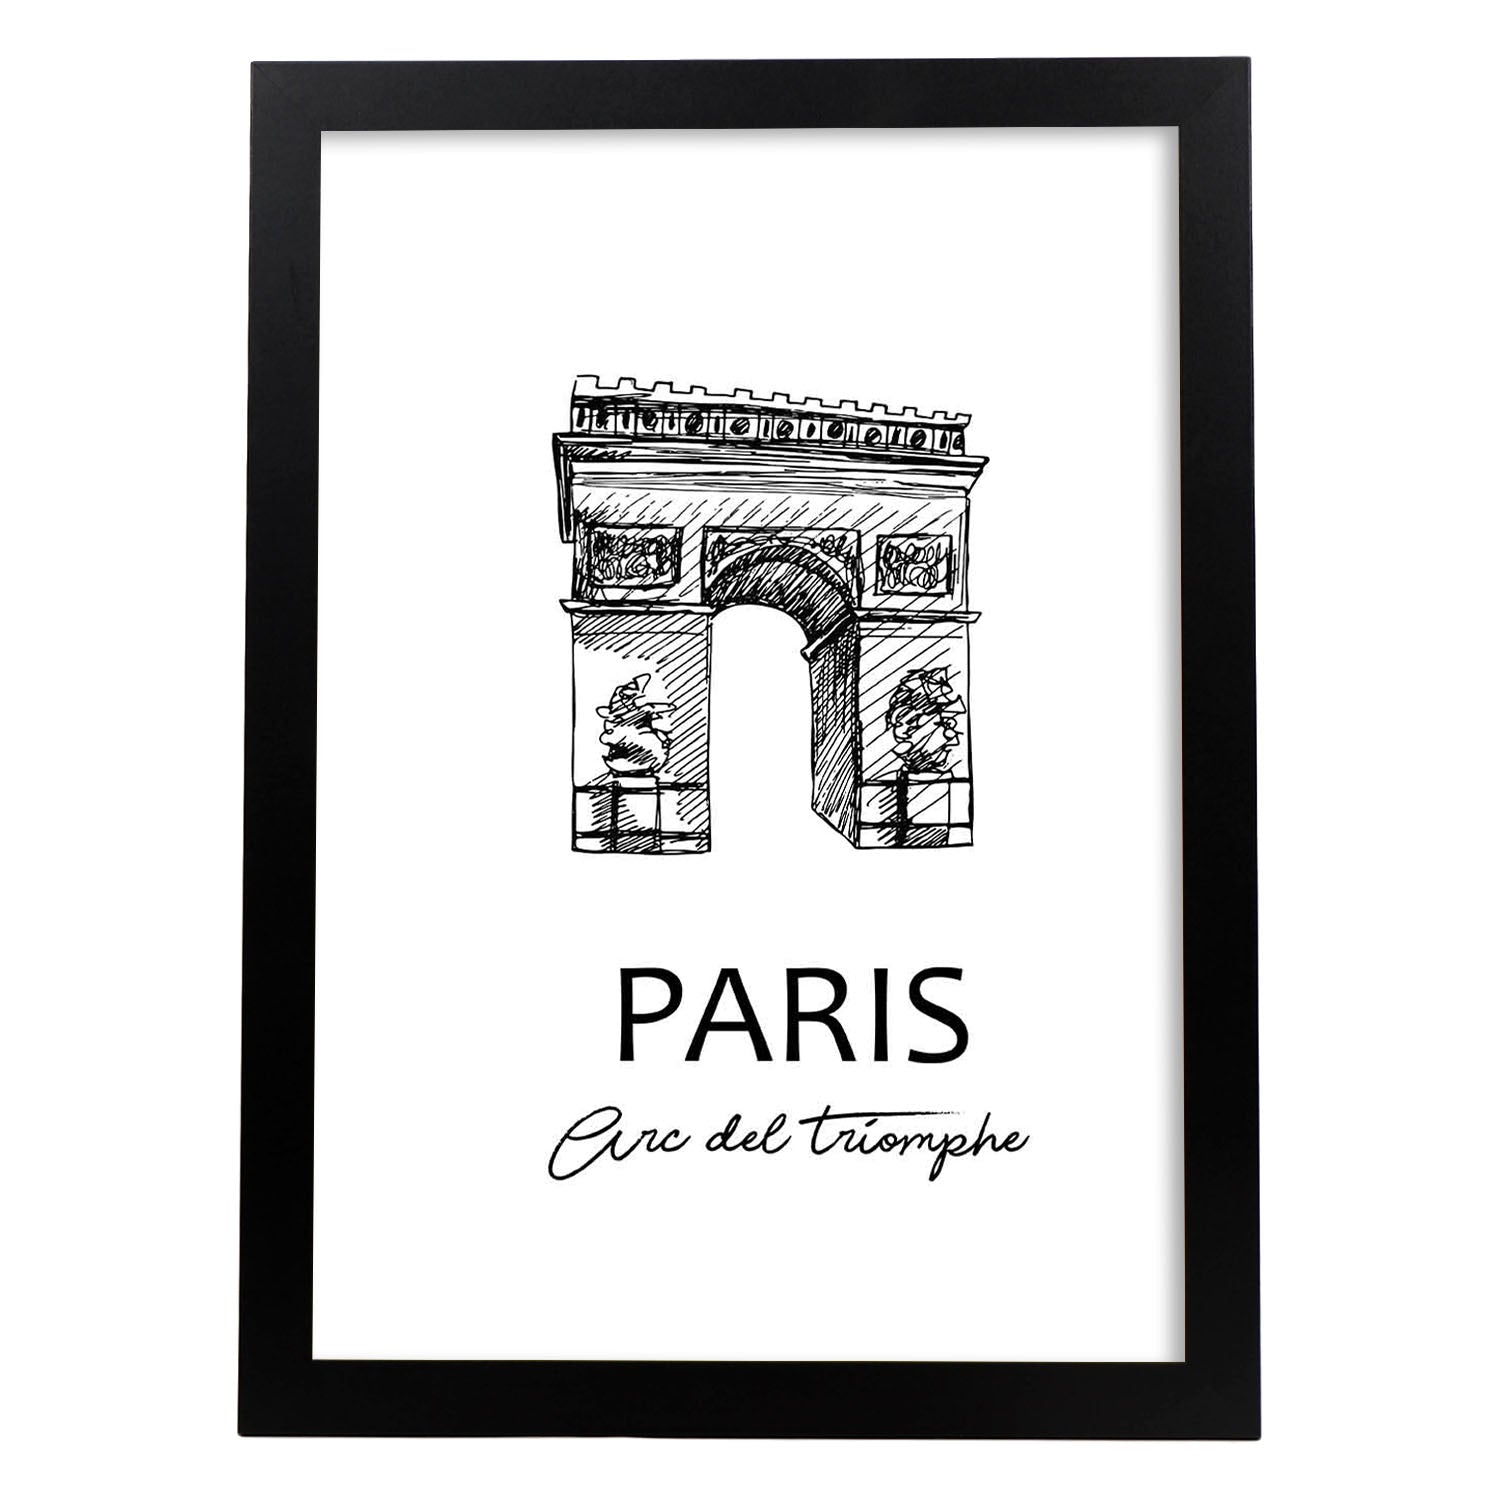 Poster de Paris -Arco del triunfo. Láminas con monumentos de ciudades.-Artwork-Nacnic-A3-Marco Negro-Nacnic Estudio SL